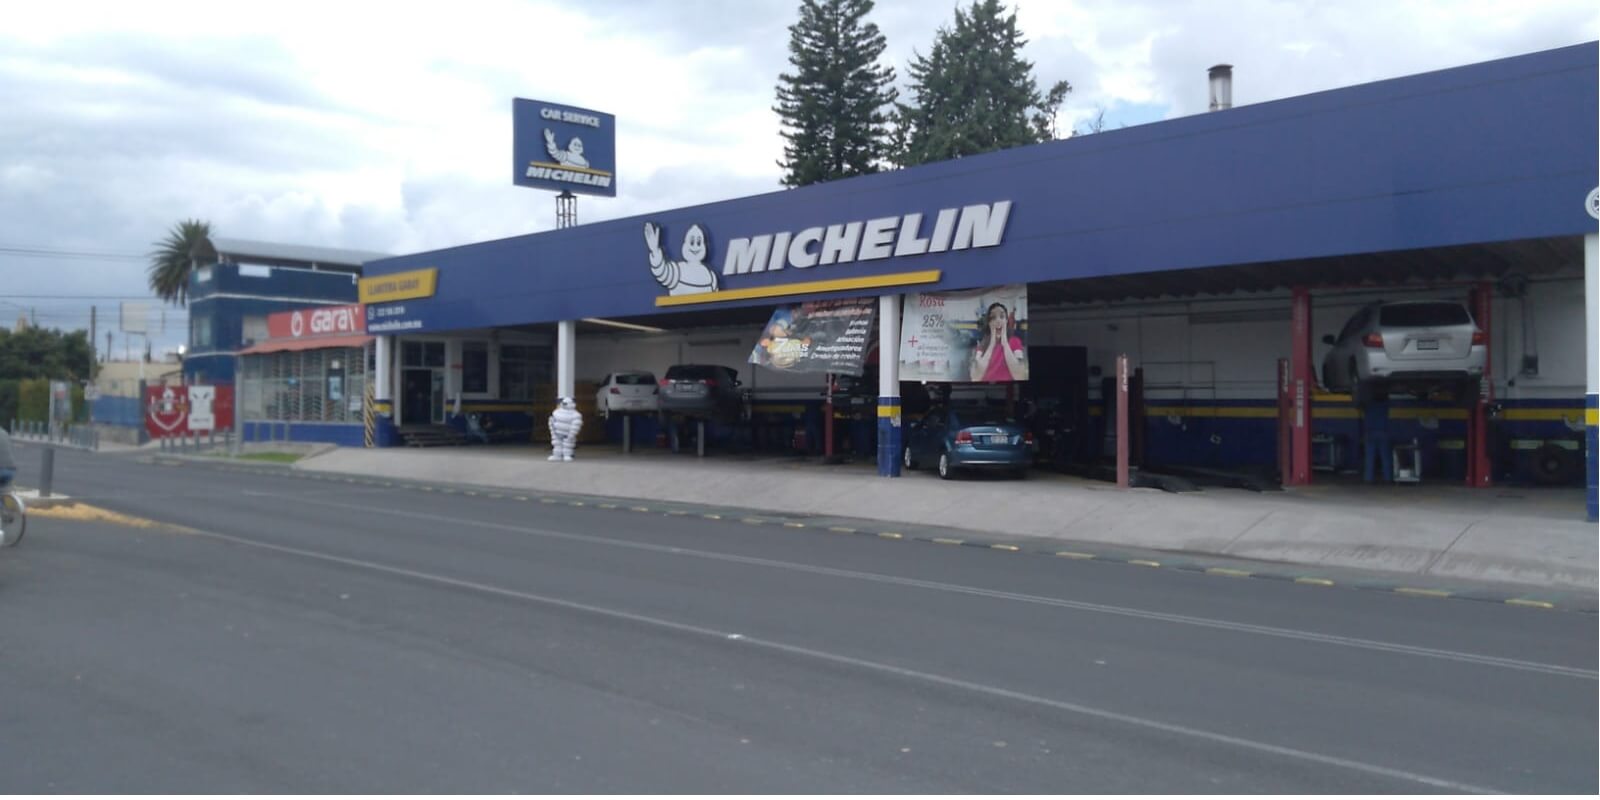 Images Tecnicentro Garay Cholula - Michelin Car Service